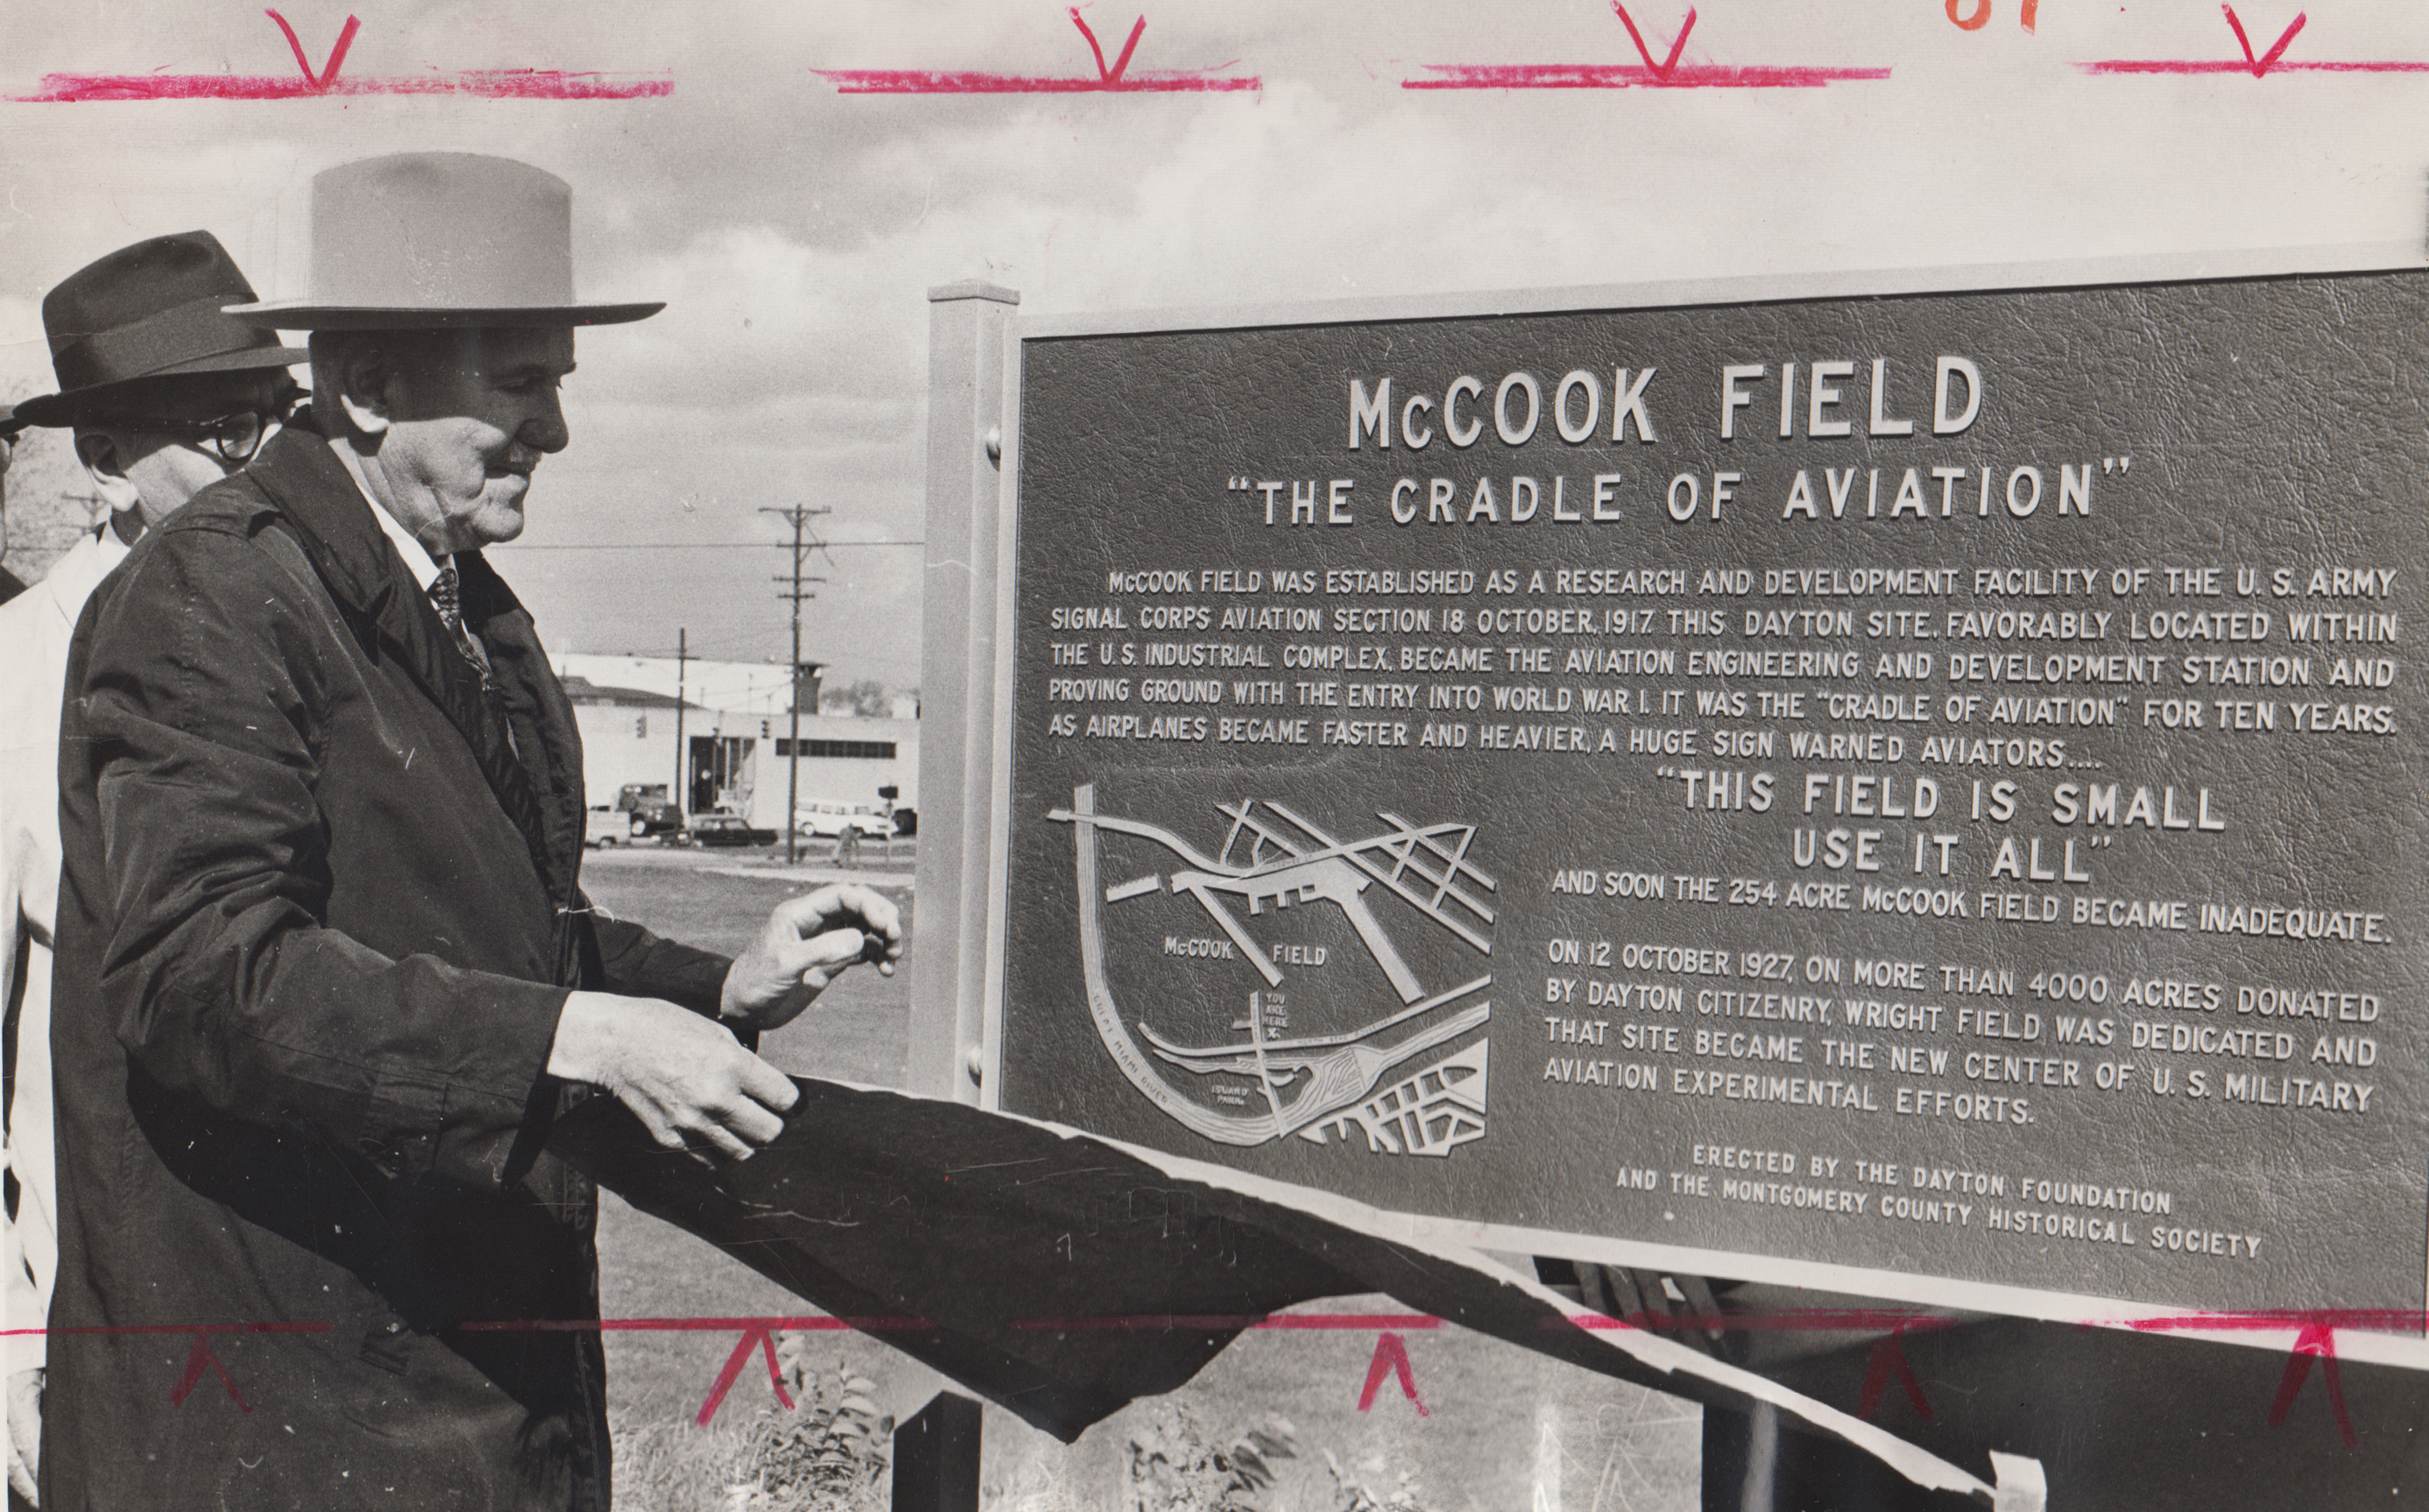 McCook Field Historic Marker, 1967